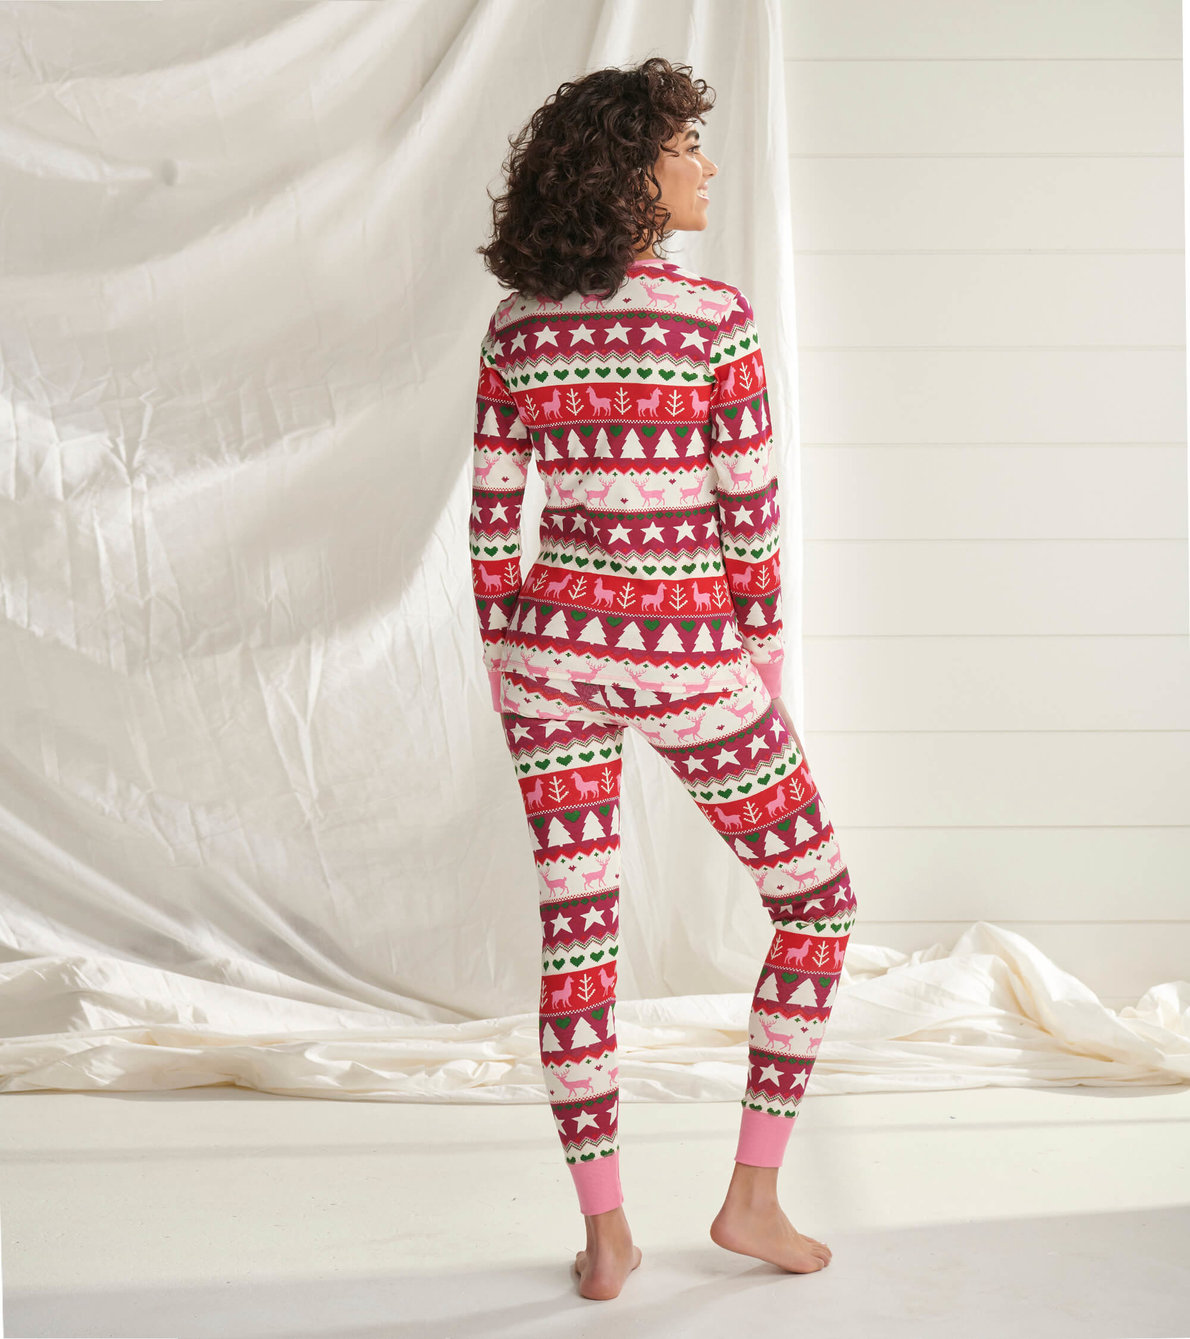 View larger image of Holiday Fair Isle Women's Pajama Set